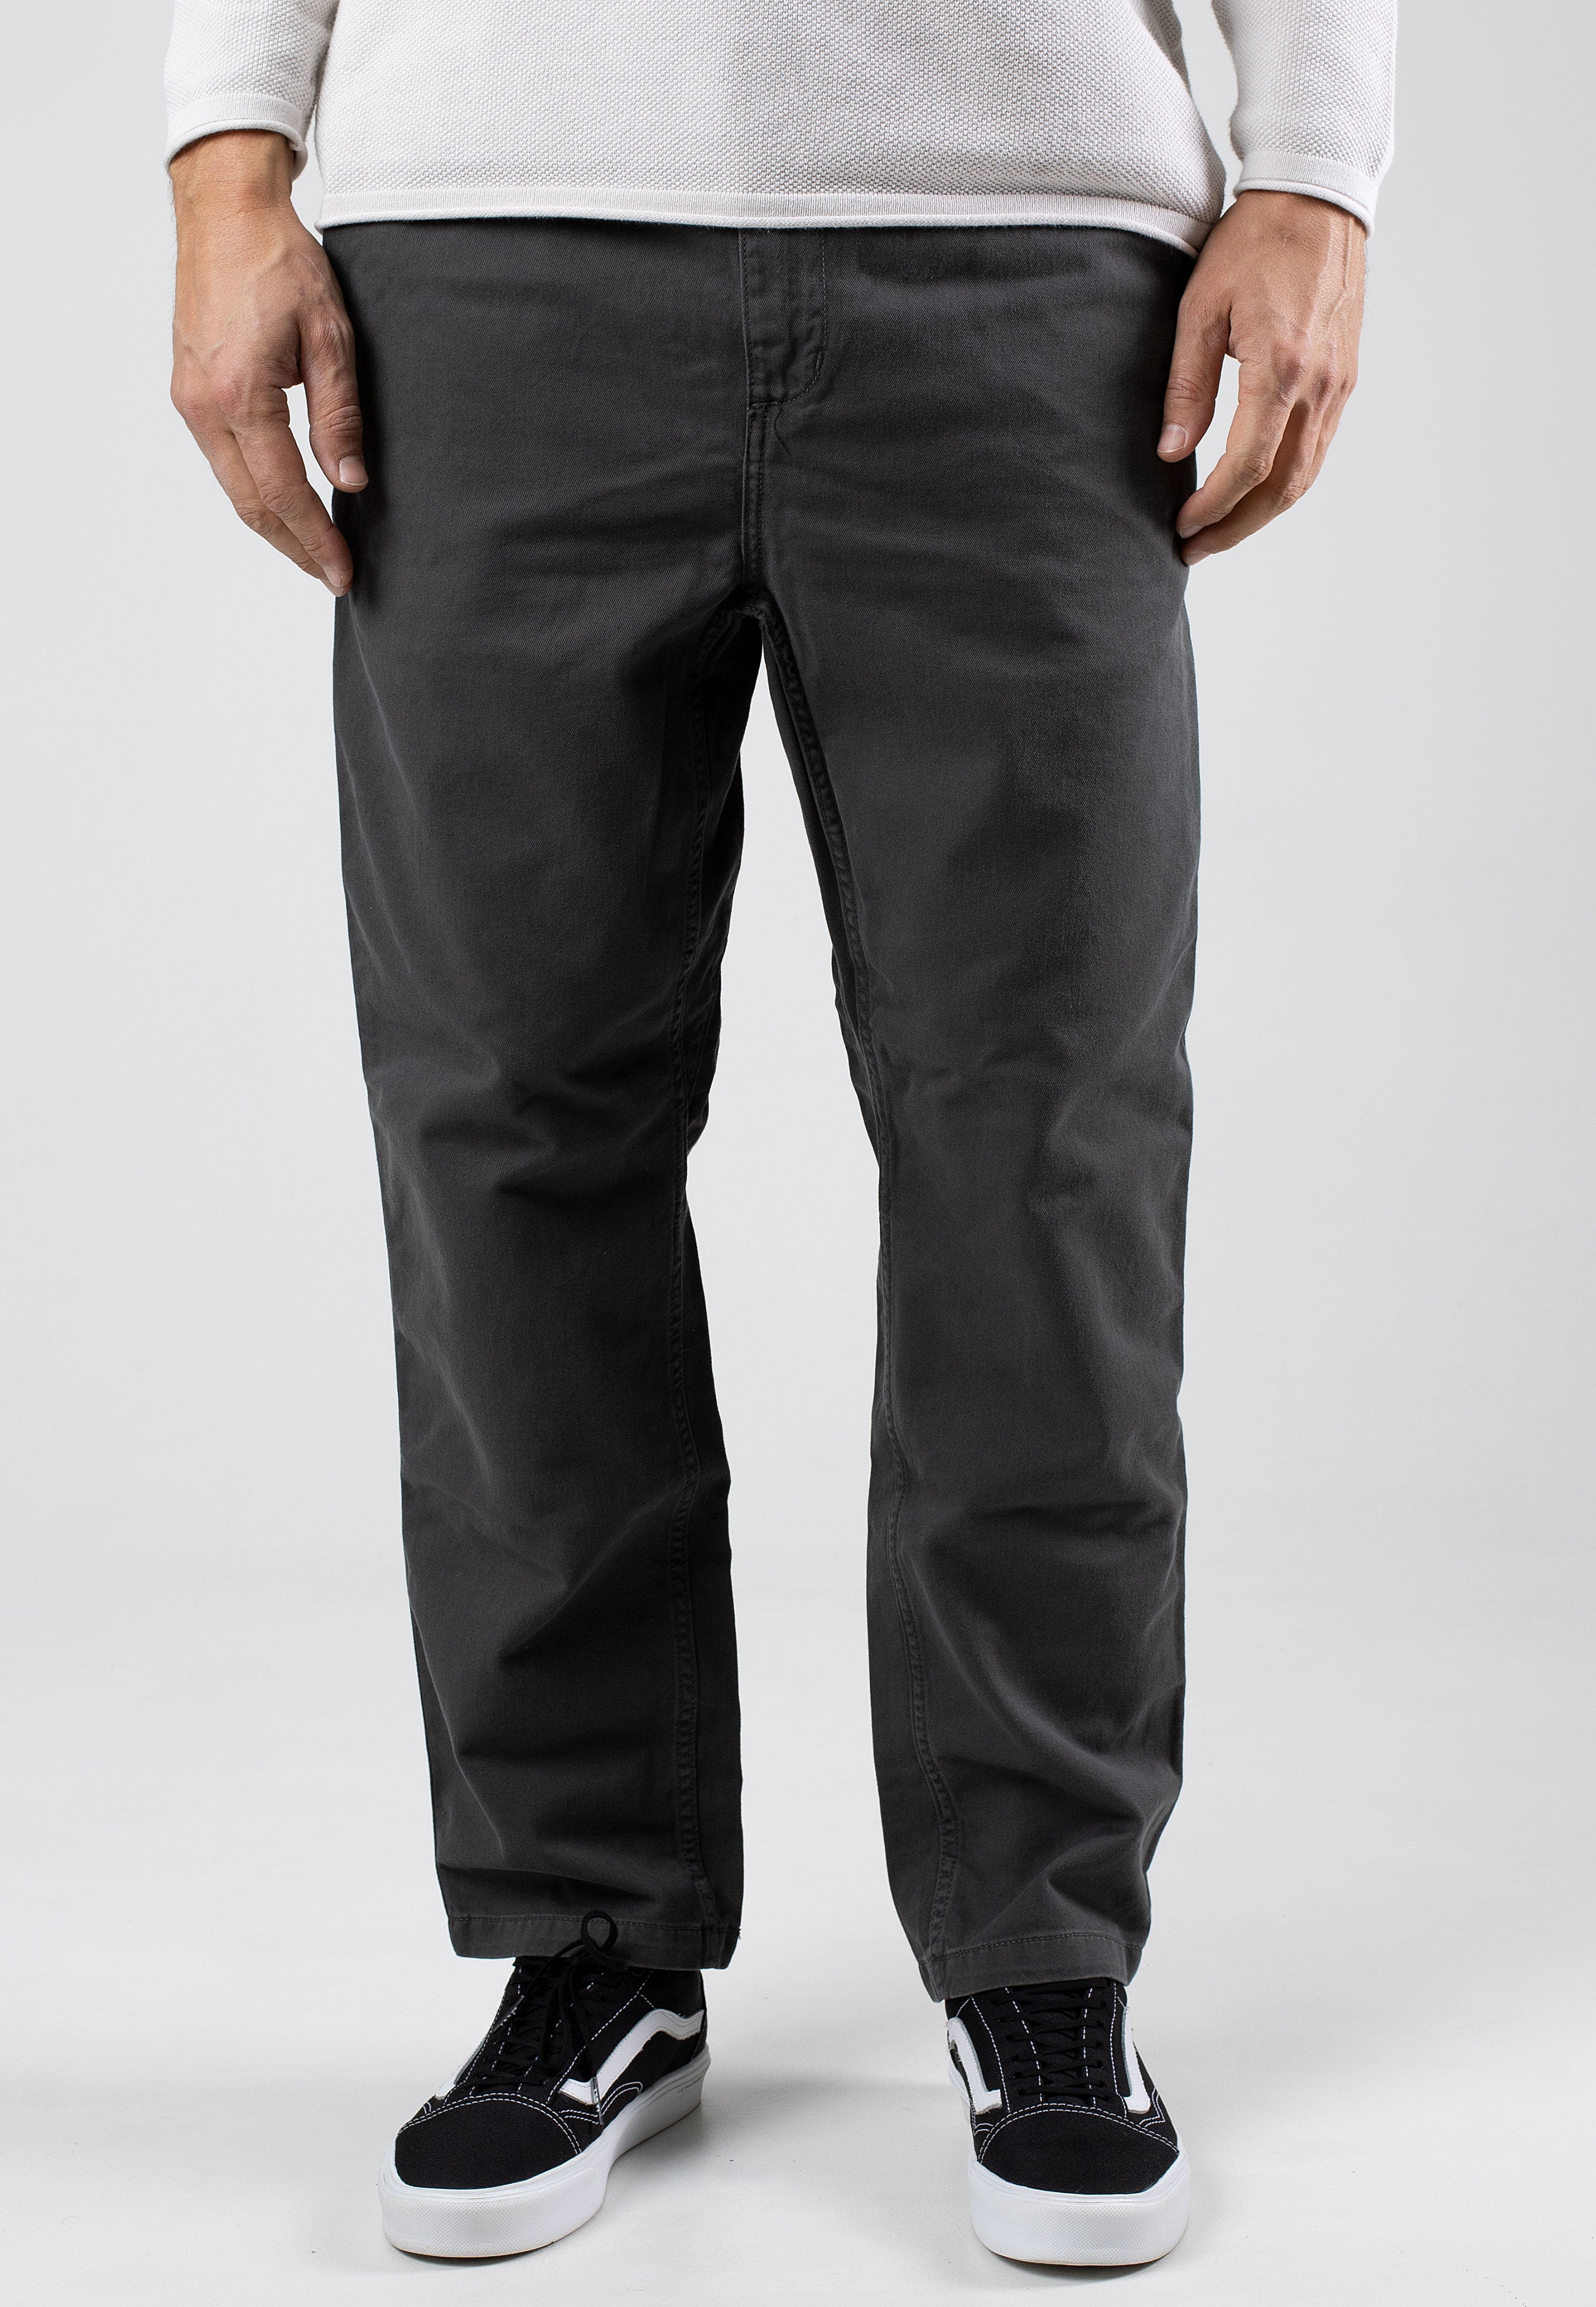 Carhartt WIP - Flint Garment Dyed Jura - Pants | Men-Image